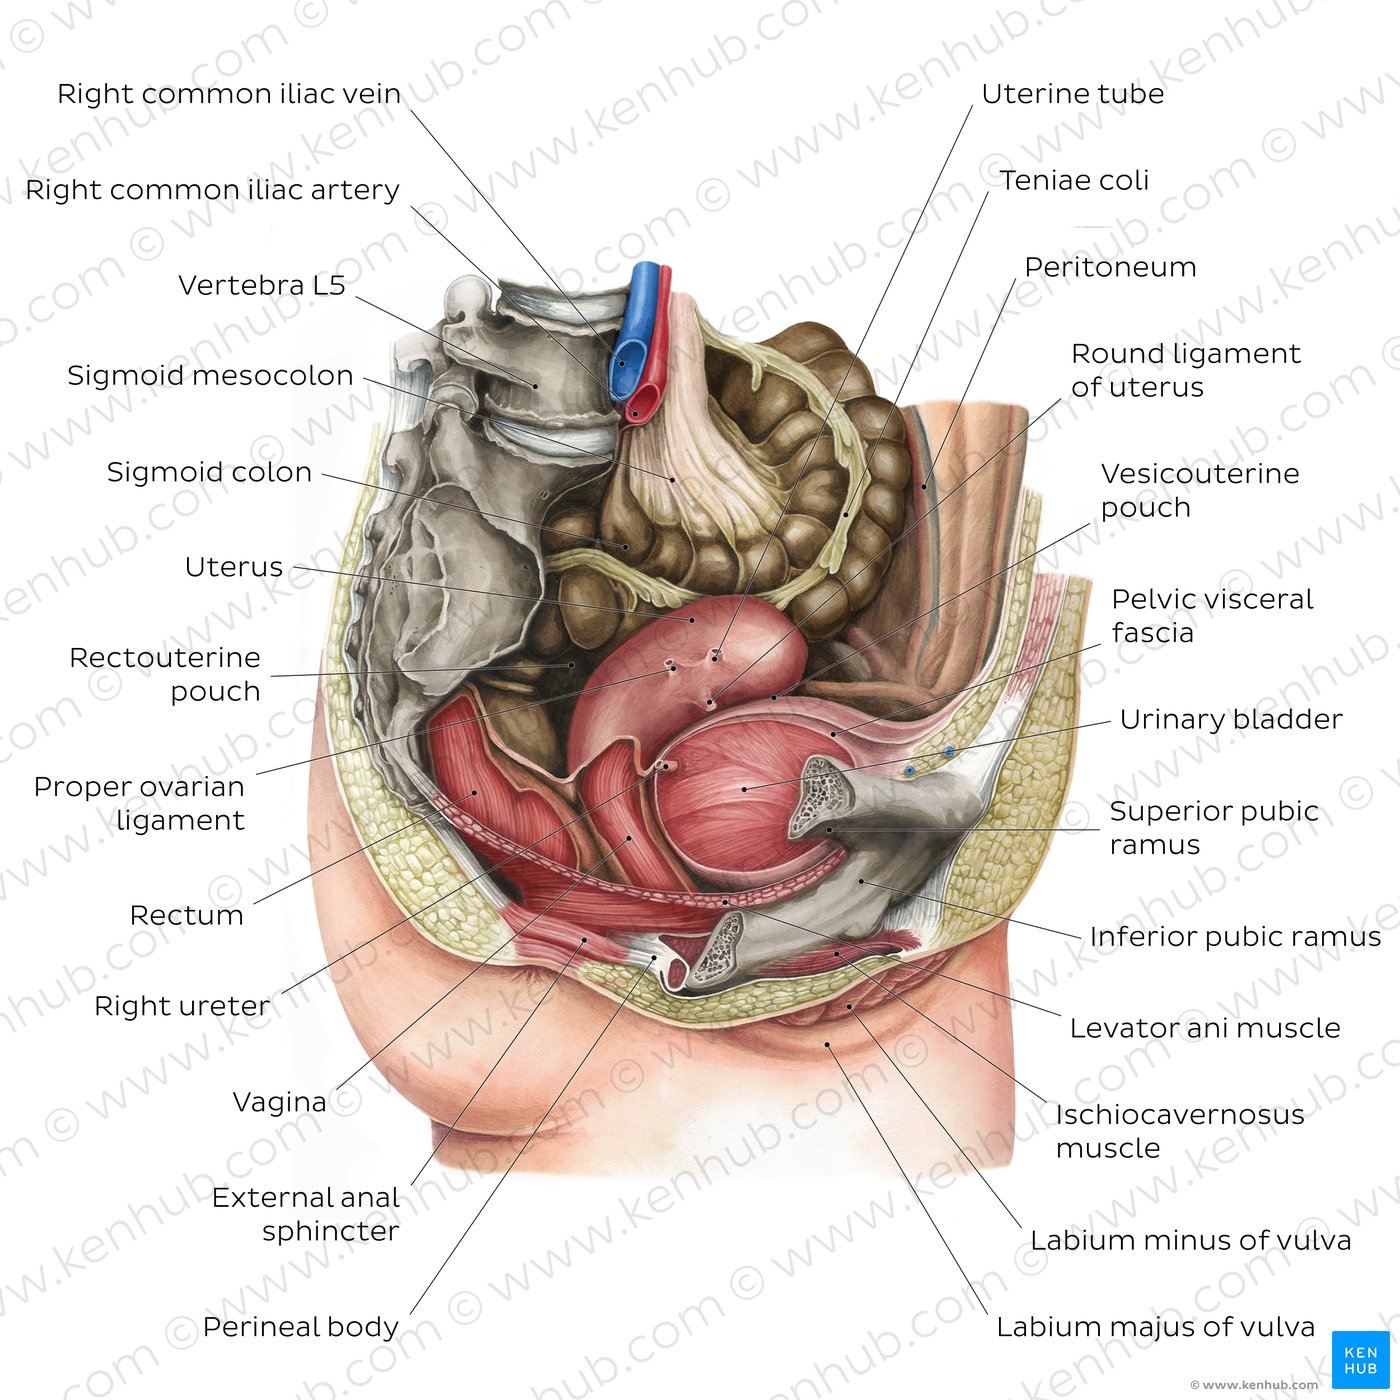 Female pelvic viscera and perineum